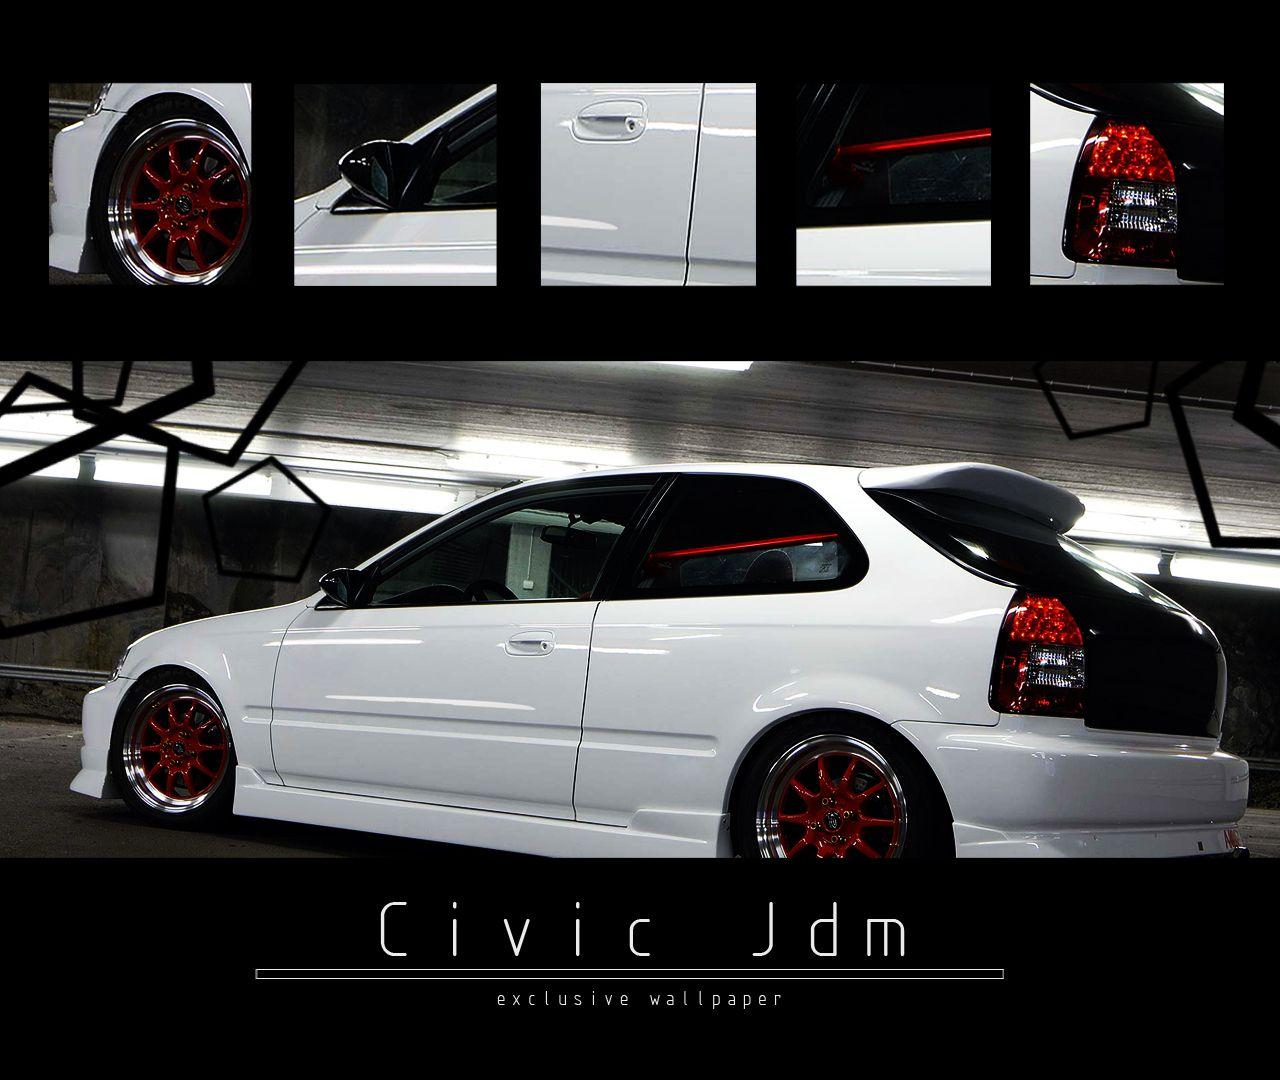 White Honda Civic Jdm Wallpaper Free. All HD Wallpaper